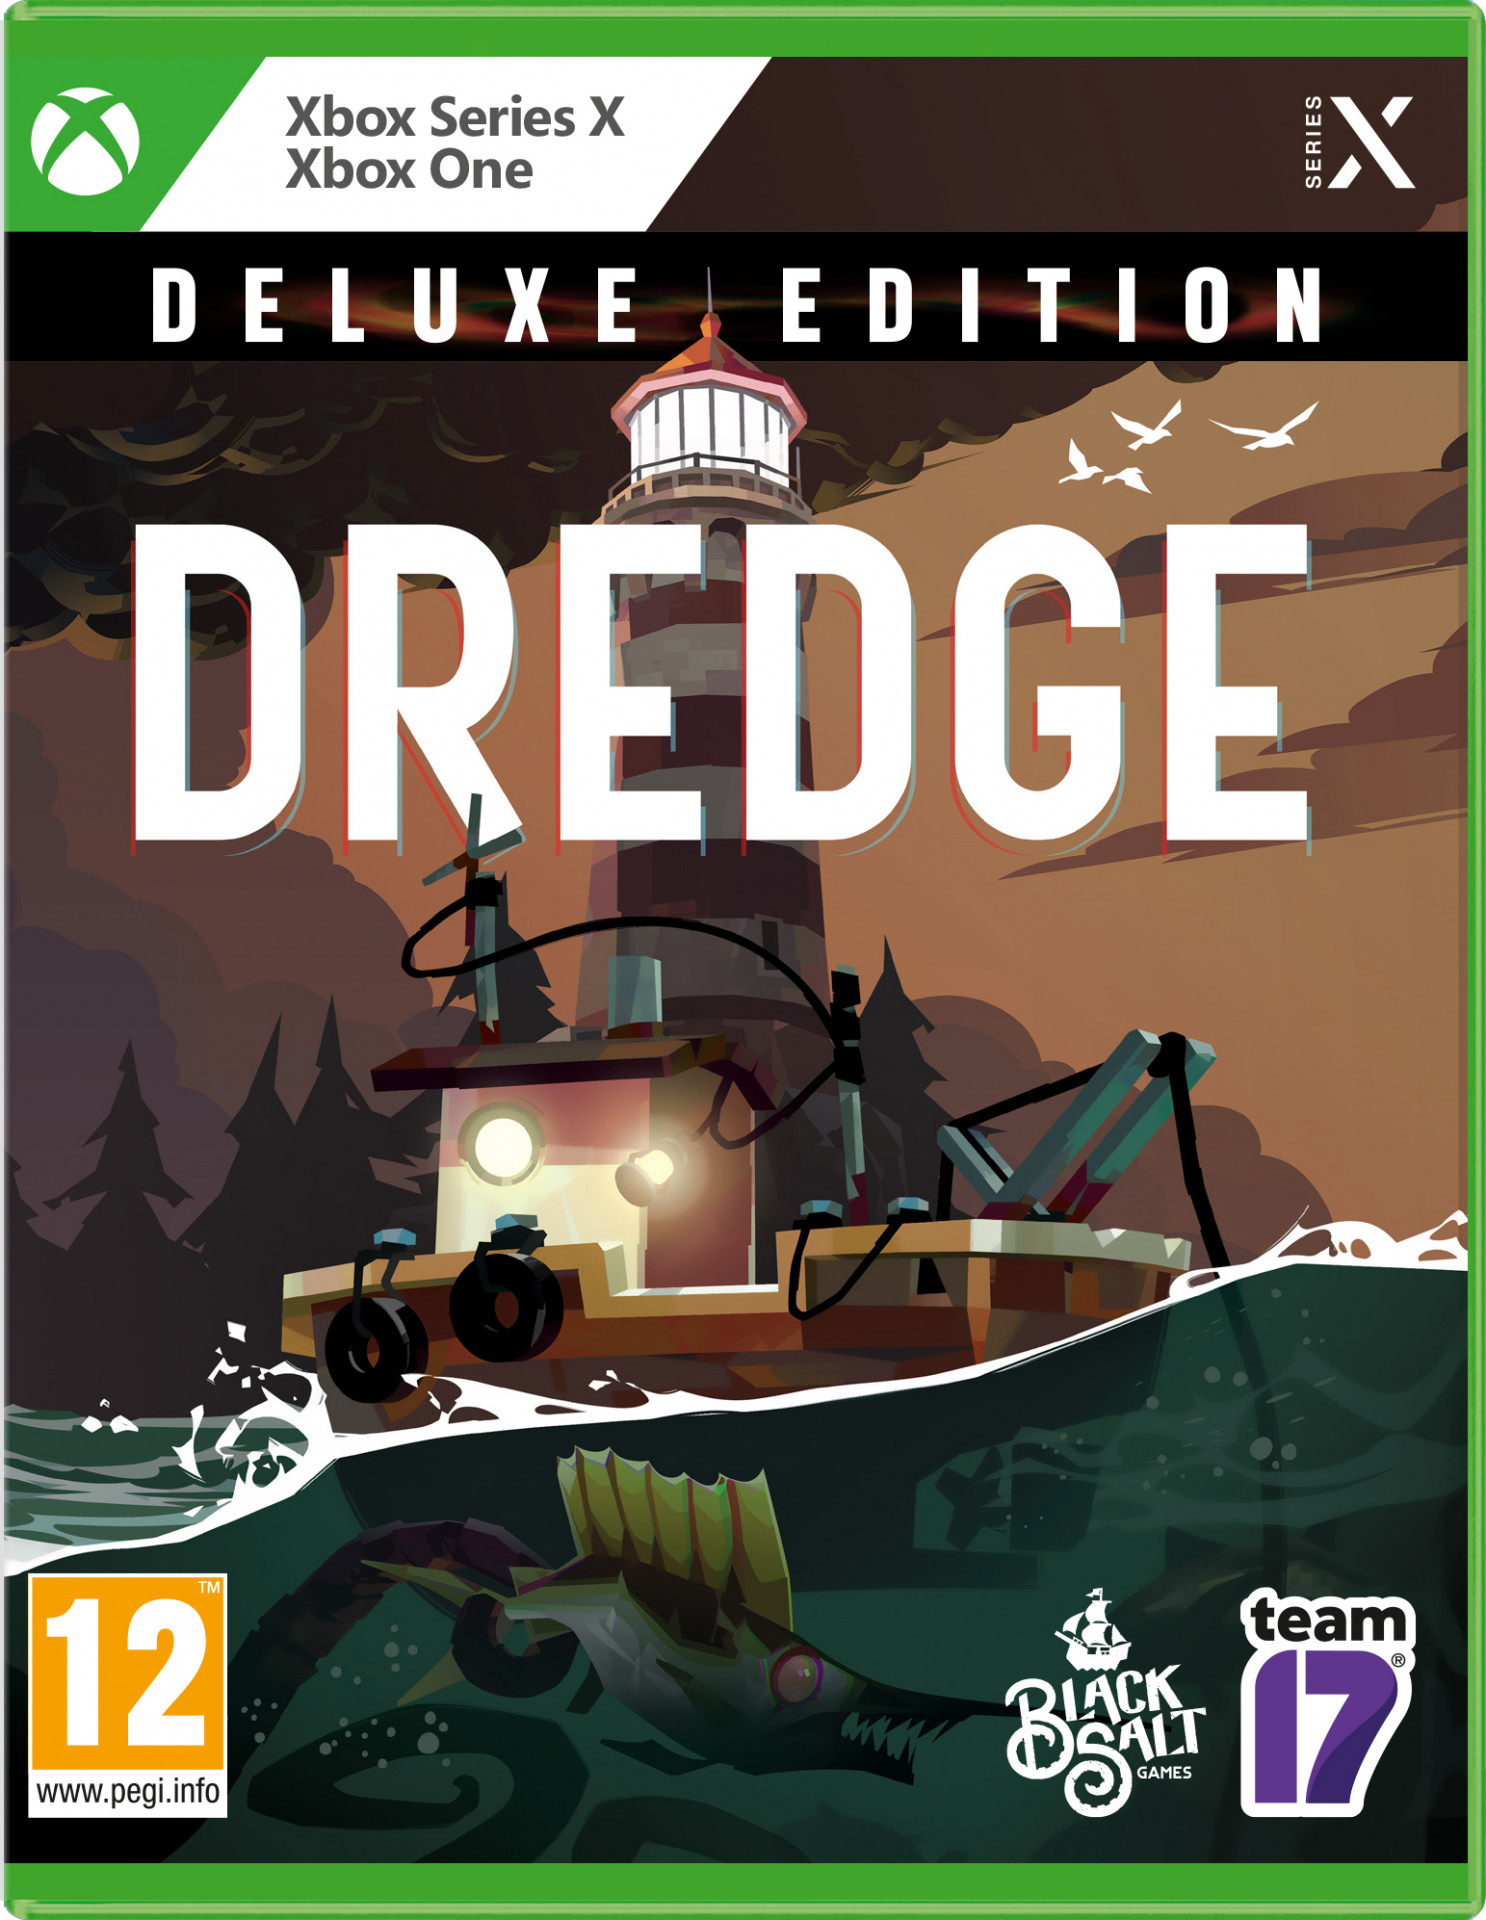 Dredge - Deluxe Edition (Xbox Series X), Team 17